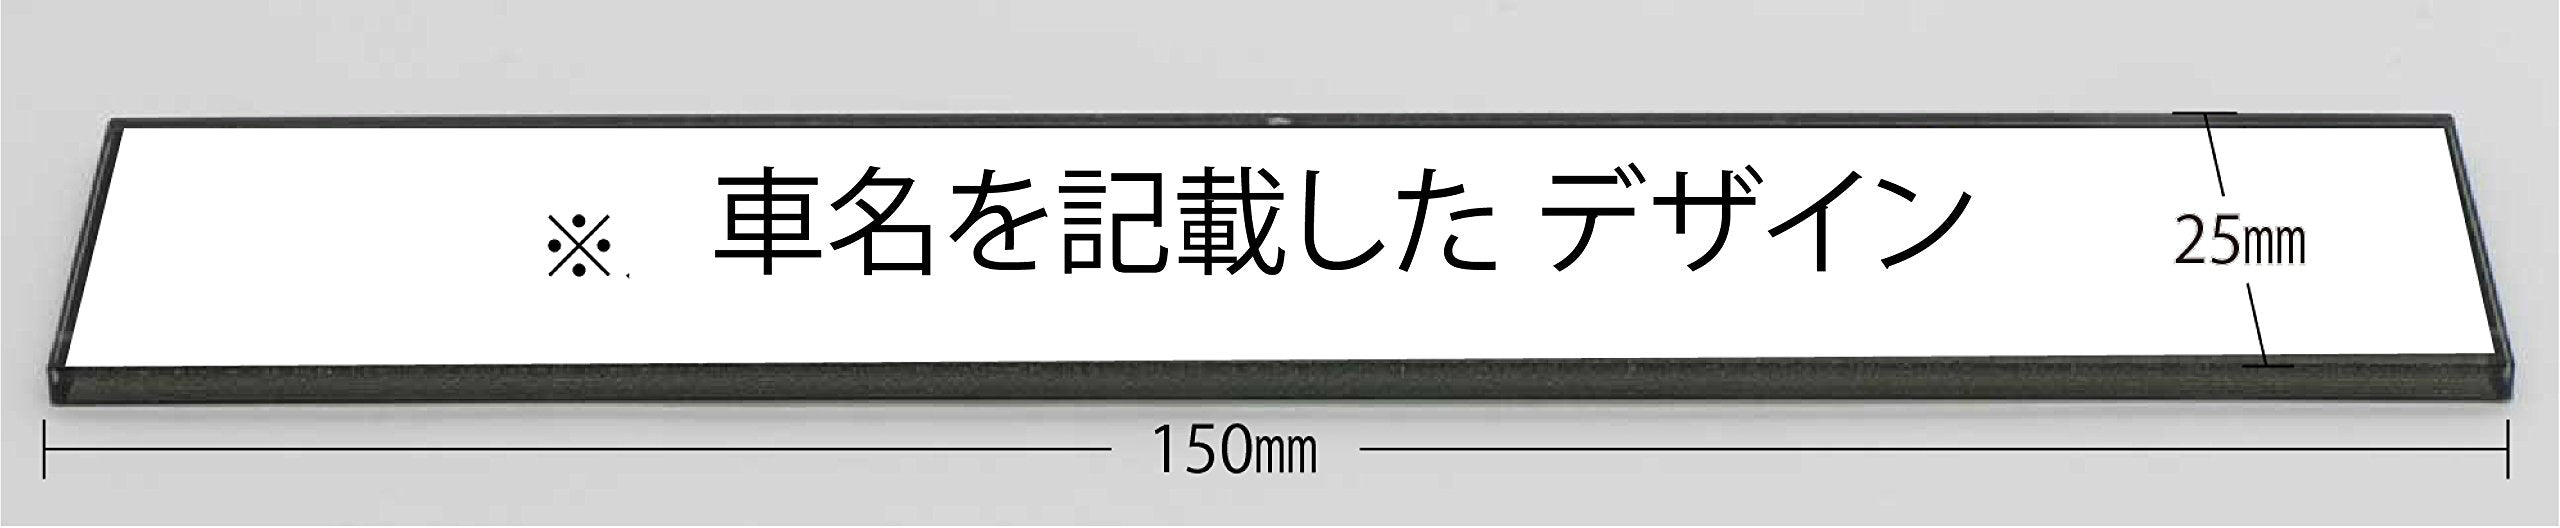 Fujimi ID-259 KPGC 10 Skyline GT-R 2 Türen 71 mit Autonamensschild, Autobausatz im Maßstab 1/24